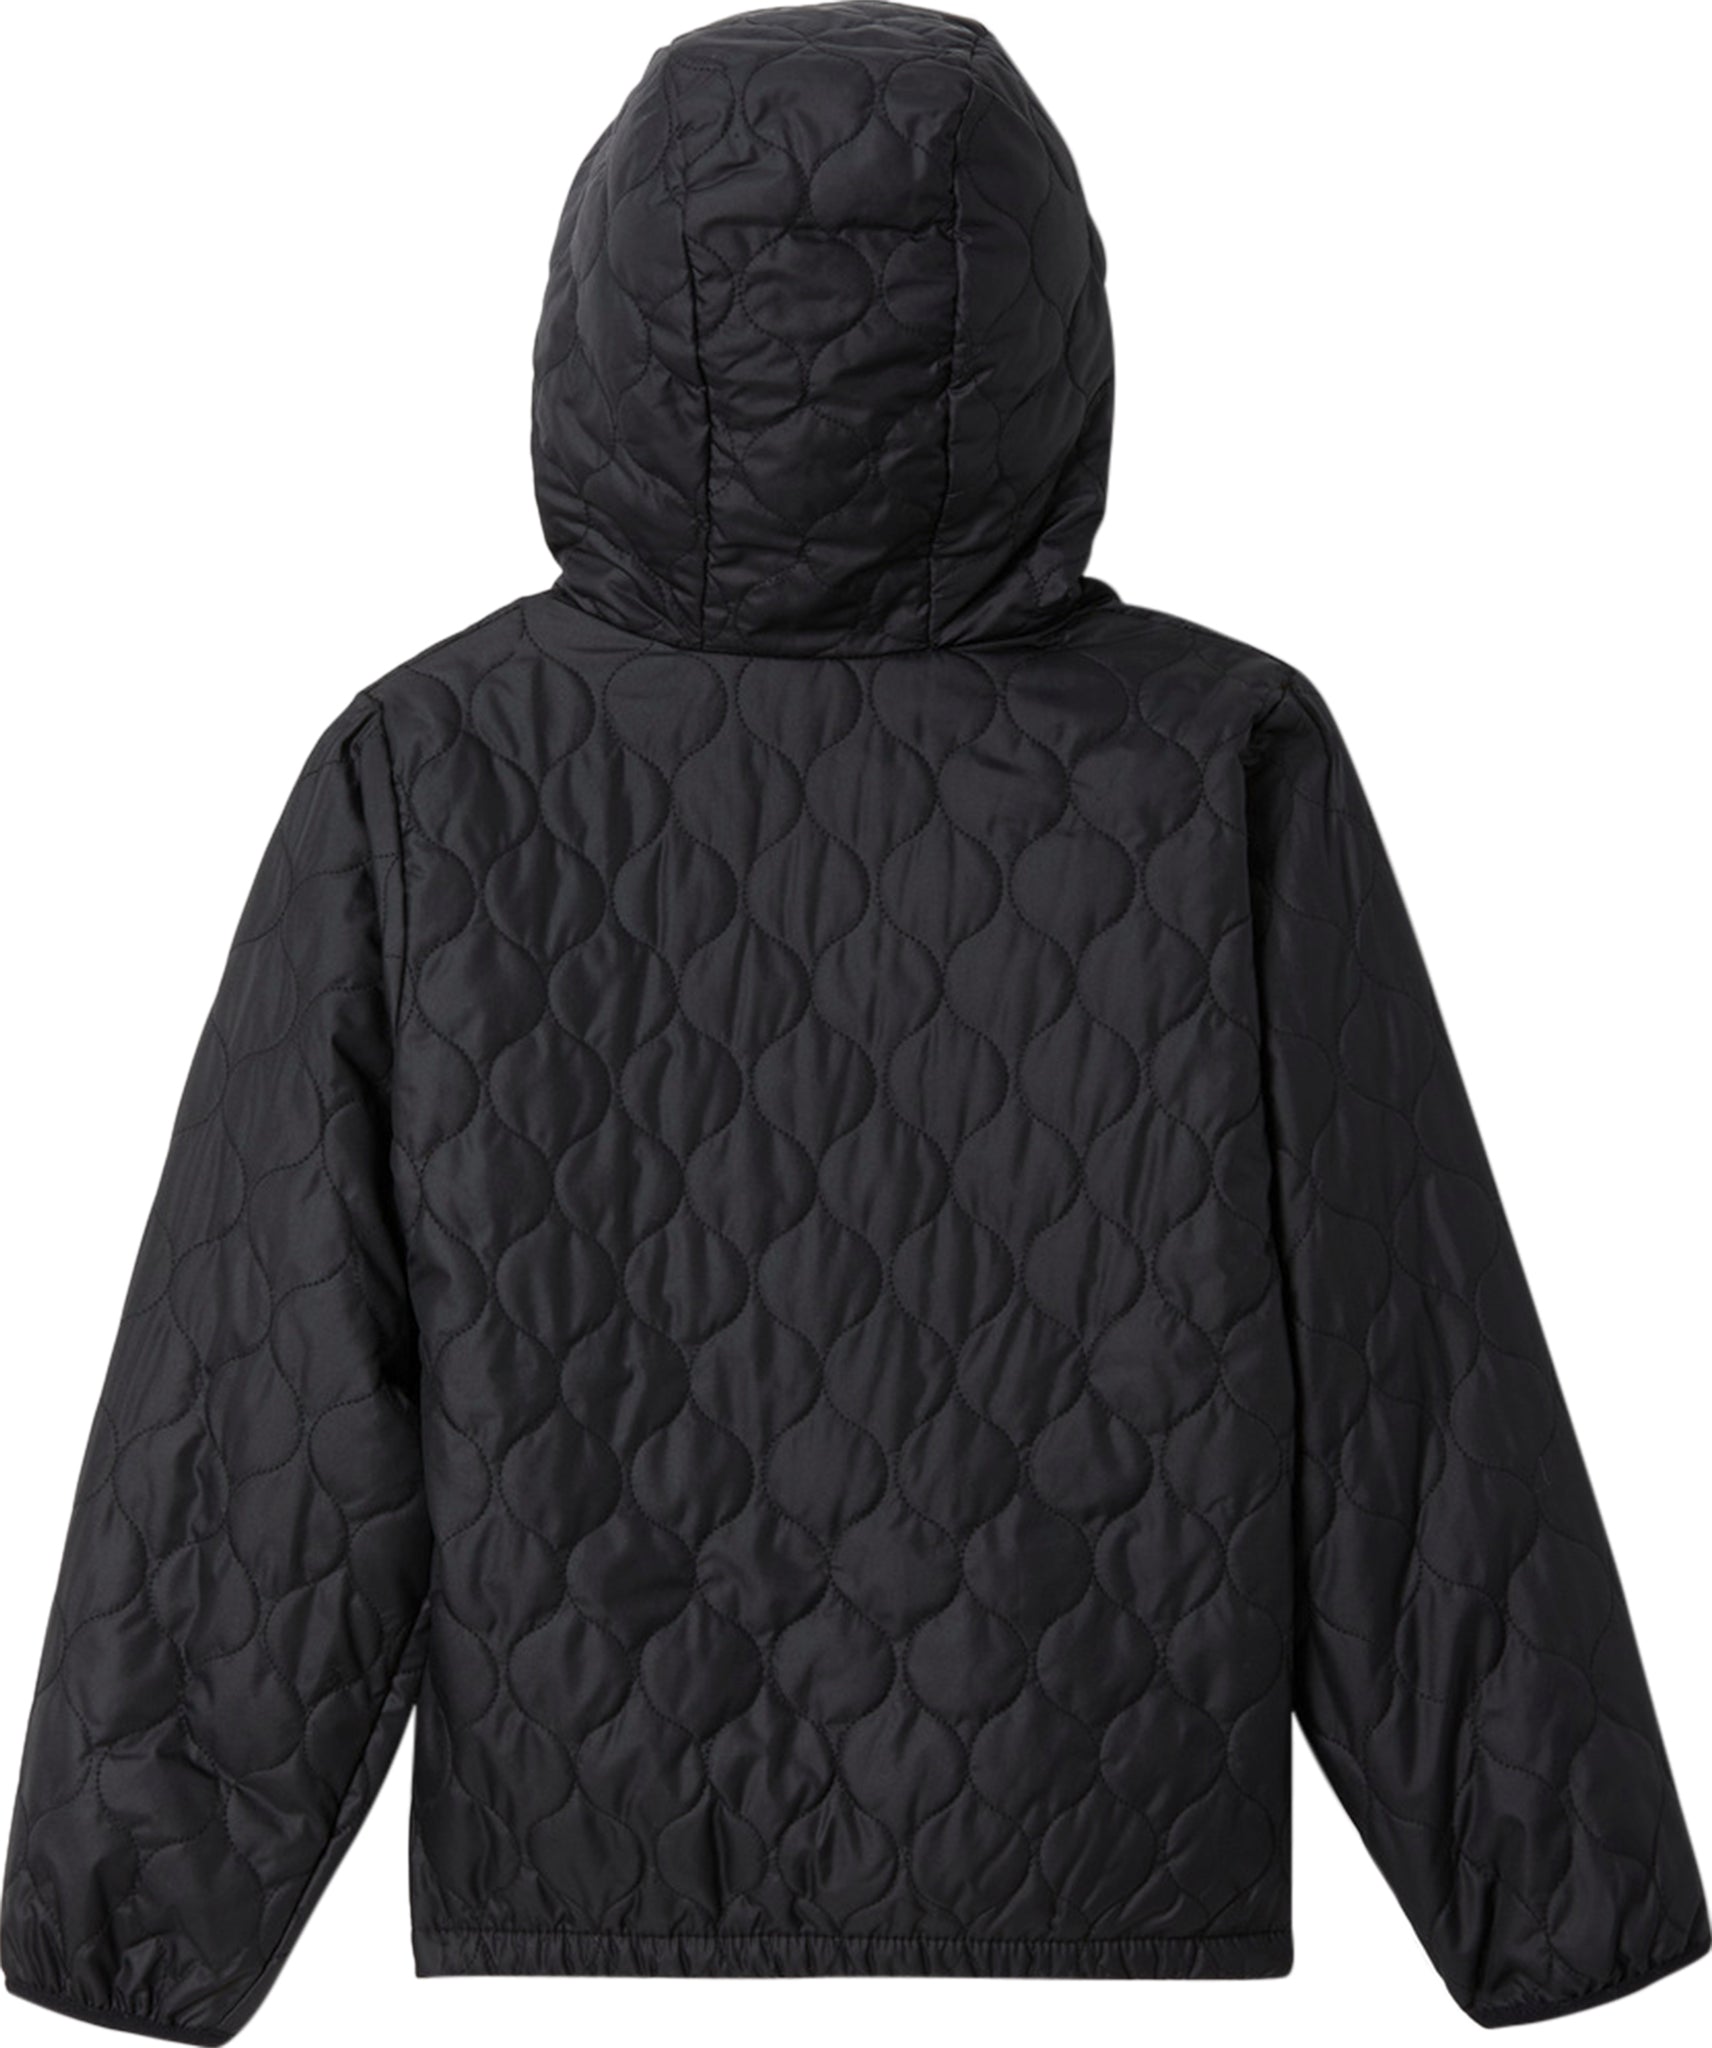 Columbia Rainy Trails™ Fleece Lined Jacket - Girls